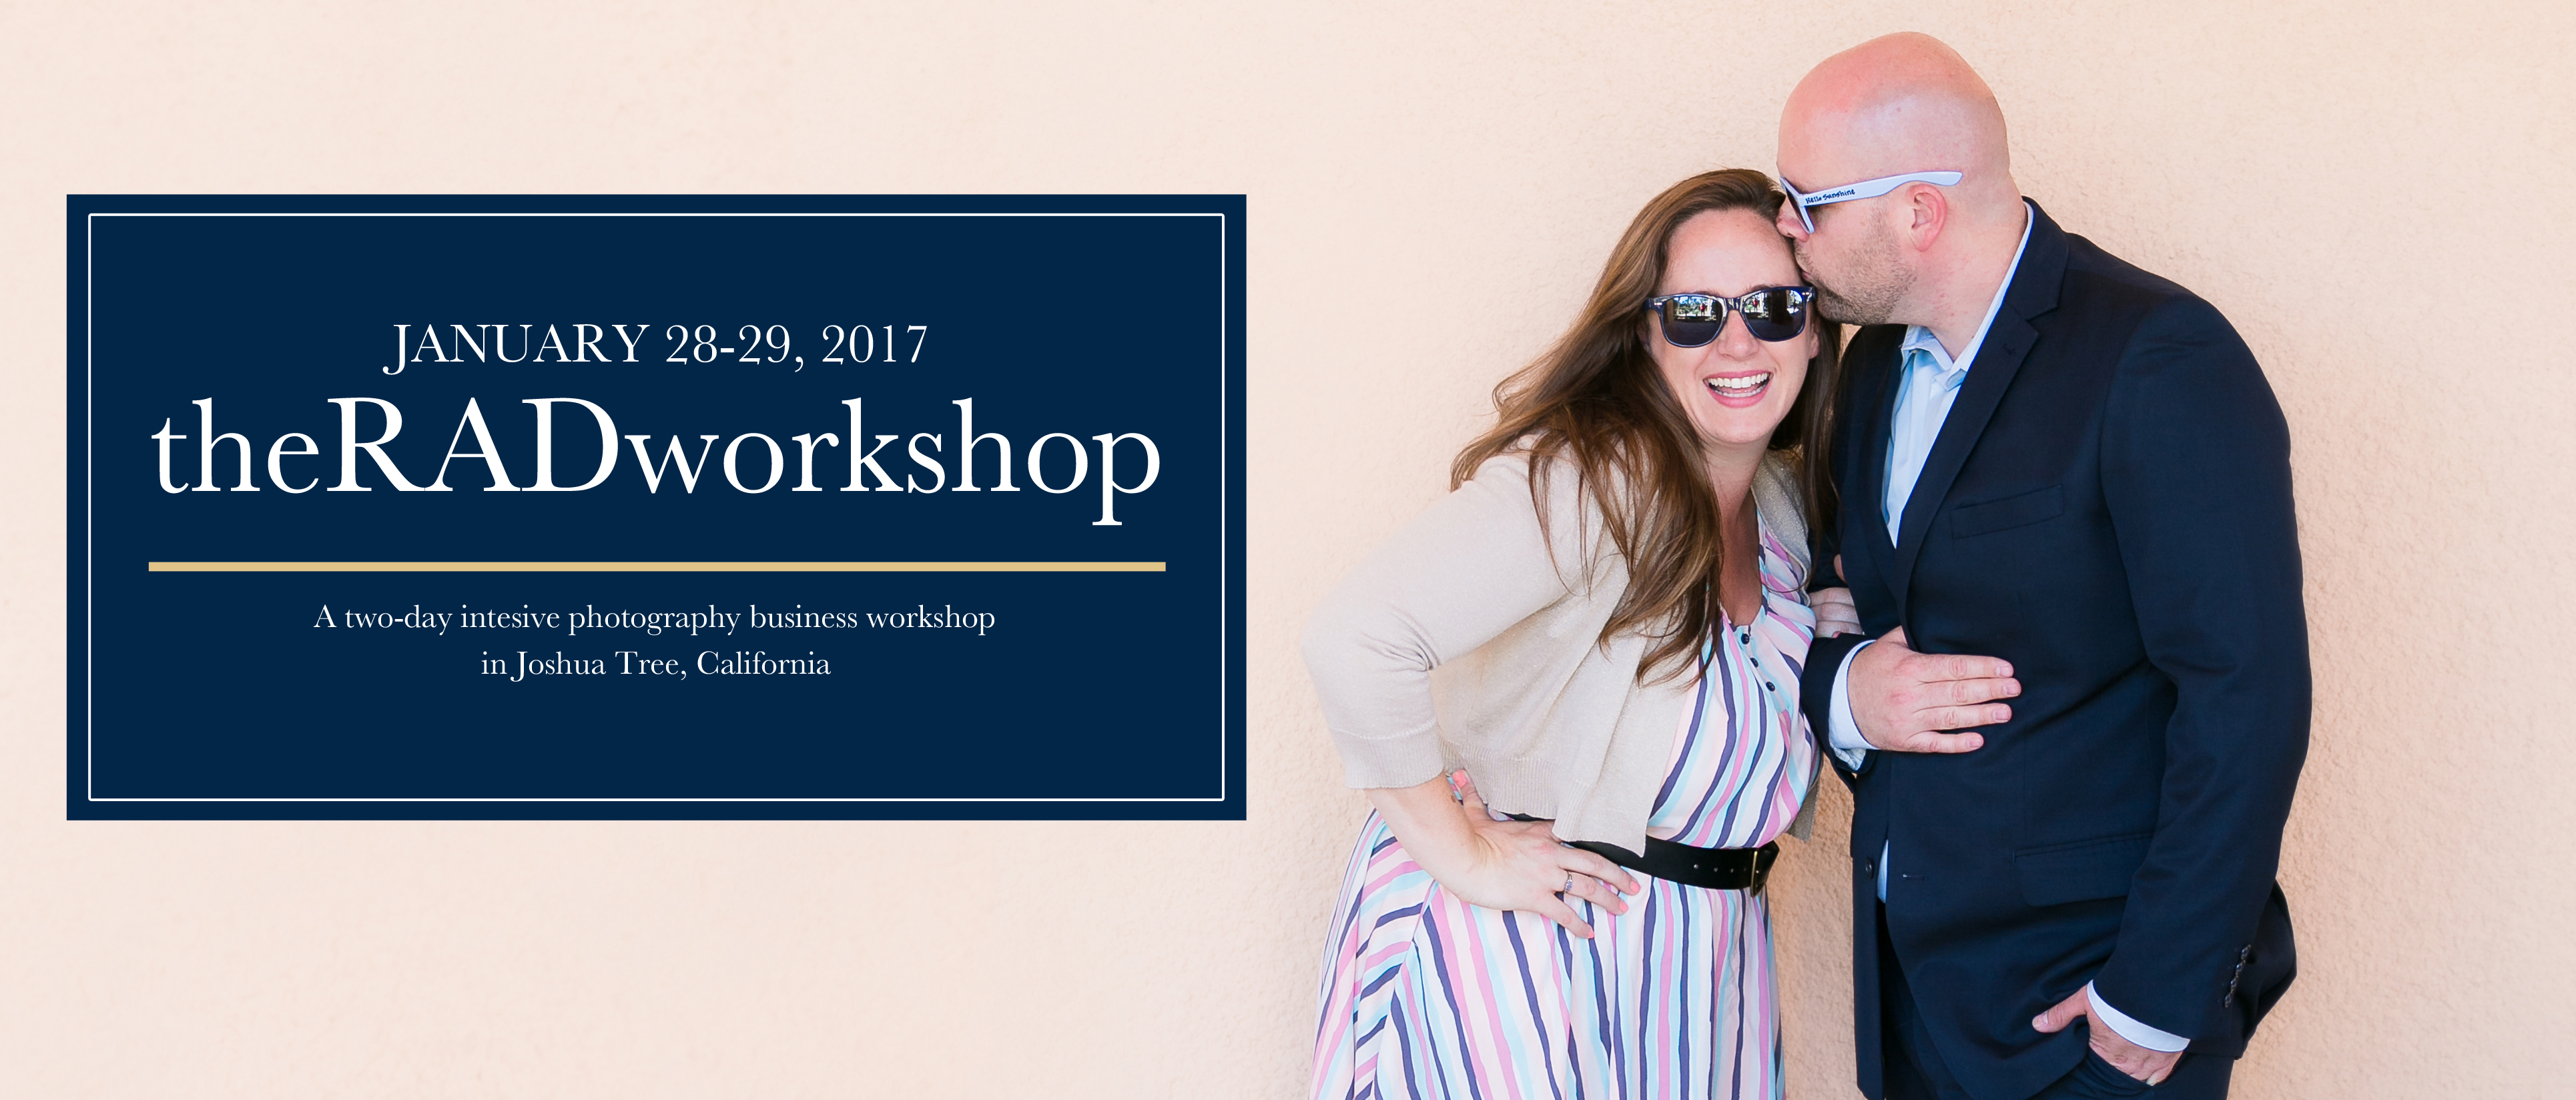 Randy and Ashley, Workshops, theRADworkshop, Joshua Tree Photography Workshops, Business Workshops for Photographers